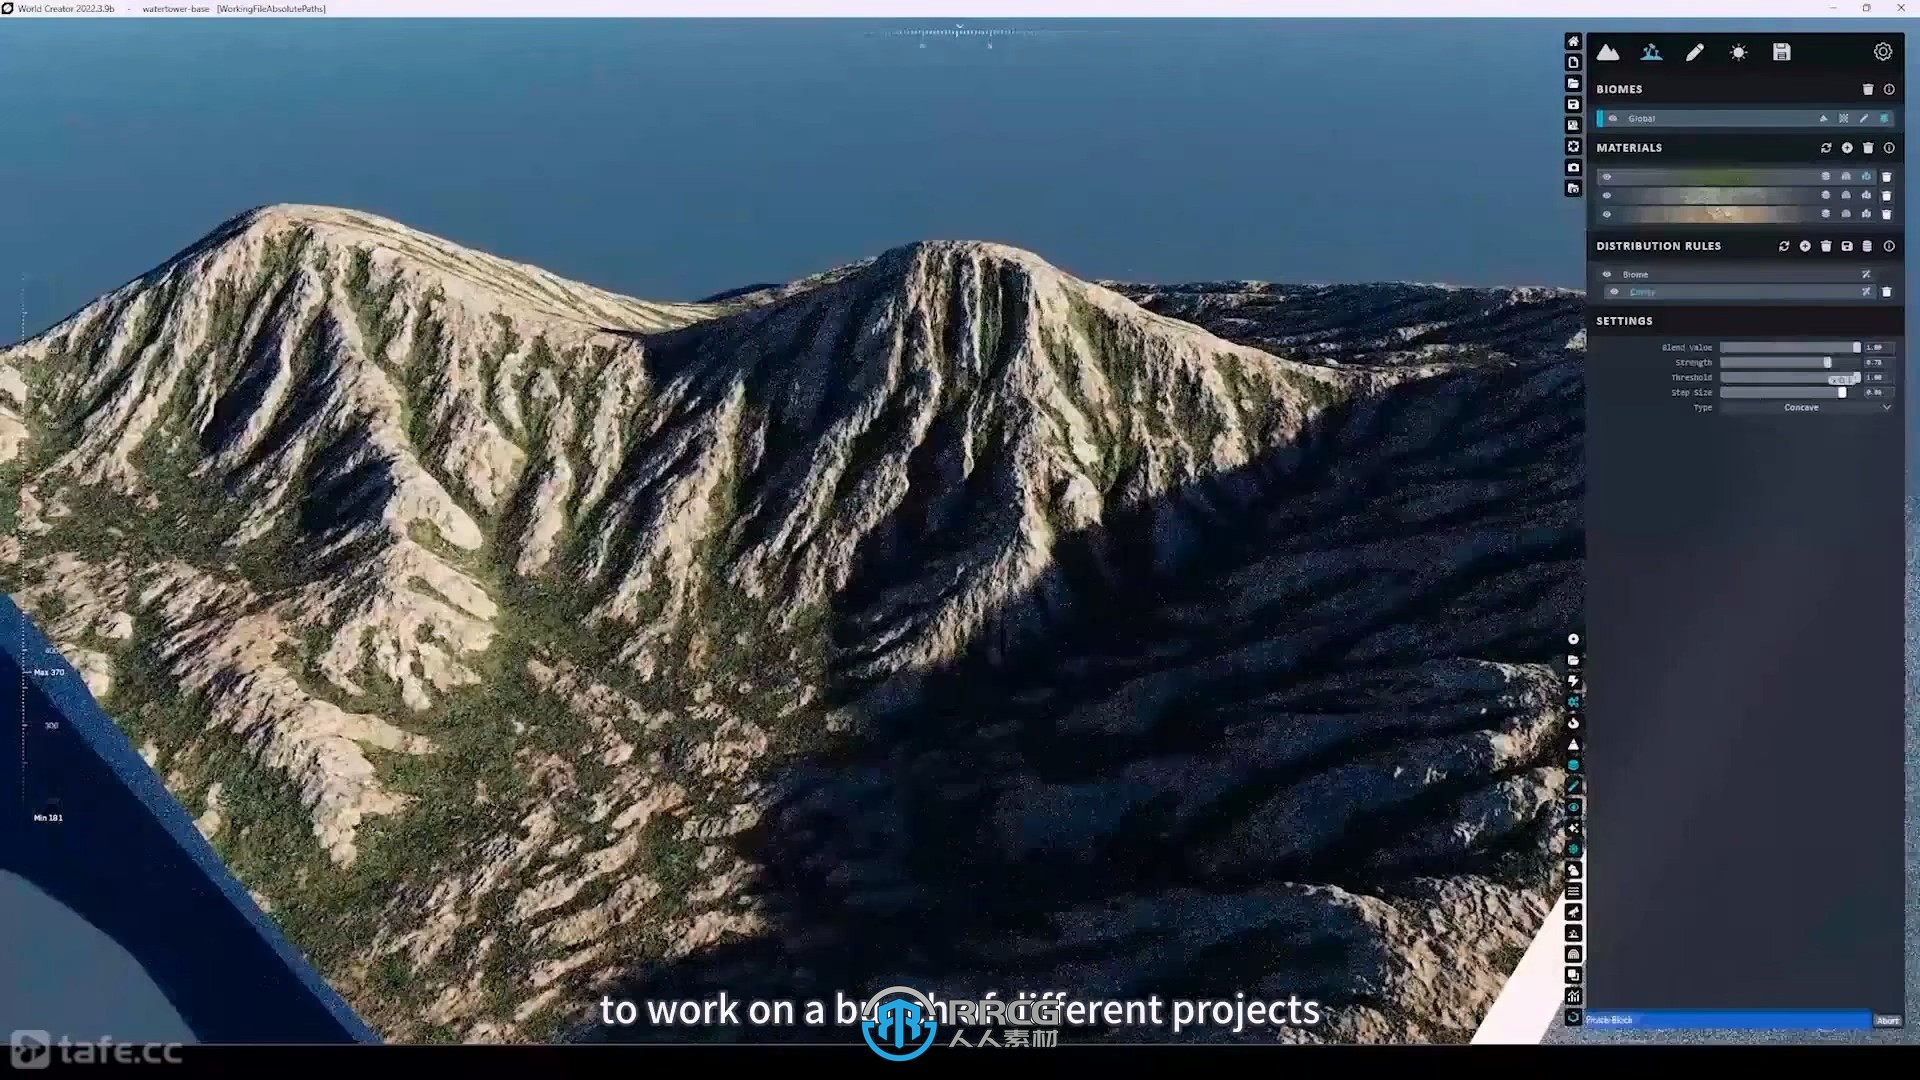 Blender与World Creator自然环境概念艺术设计视频教程